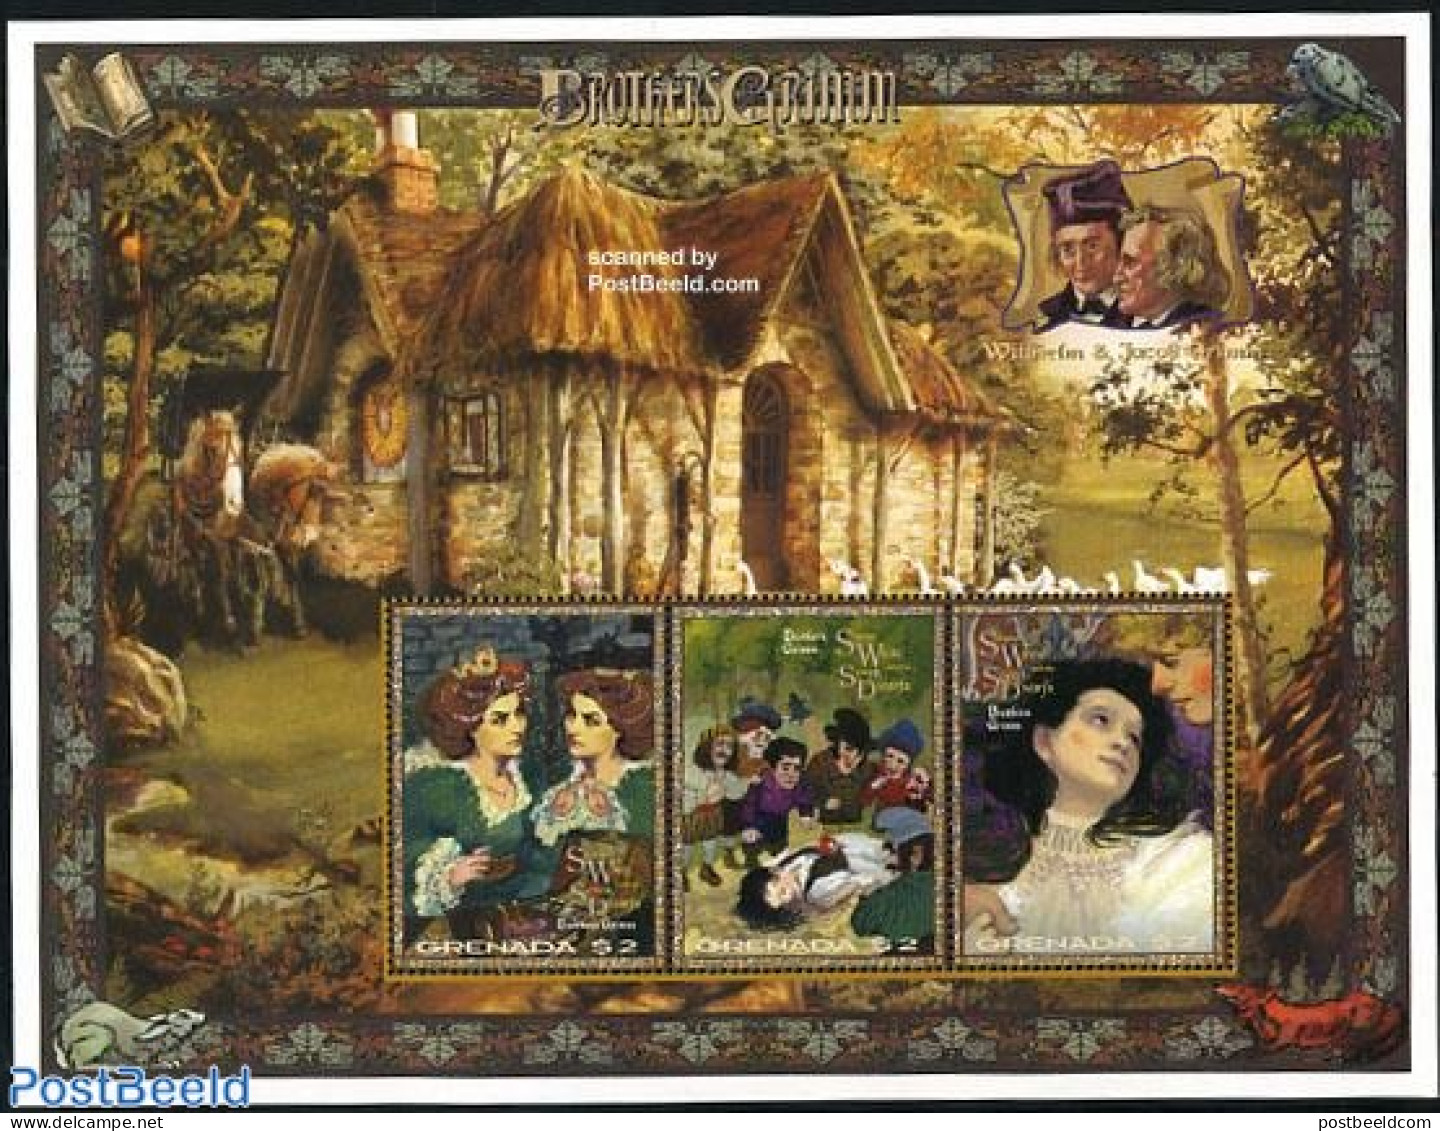 Grenada 1997 Grimm Brothers 3v M/s, Mint NH, Art - Fairytales - Fairy Tales, Popular Stories & Legends